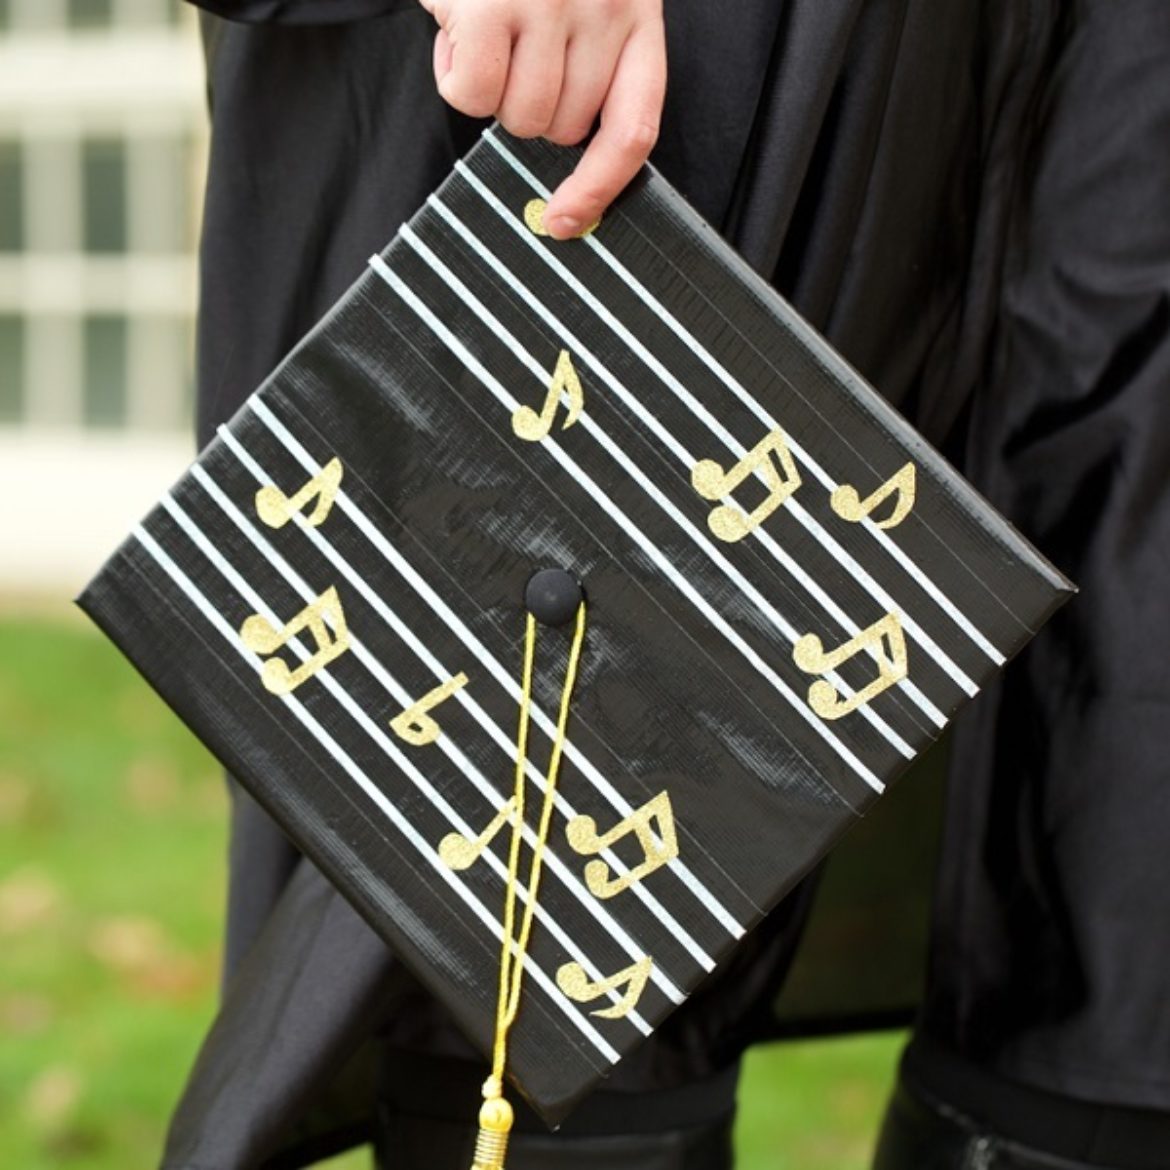 How-To: Duck Tape® Graduation Cap